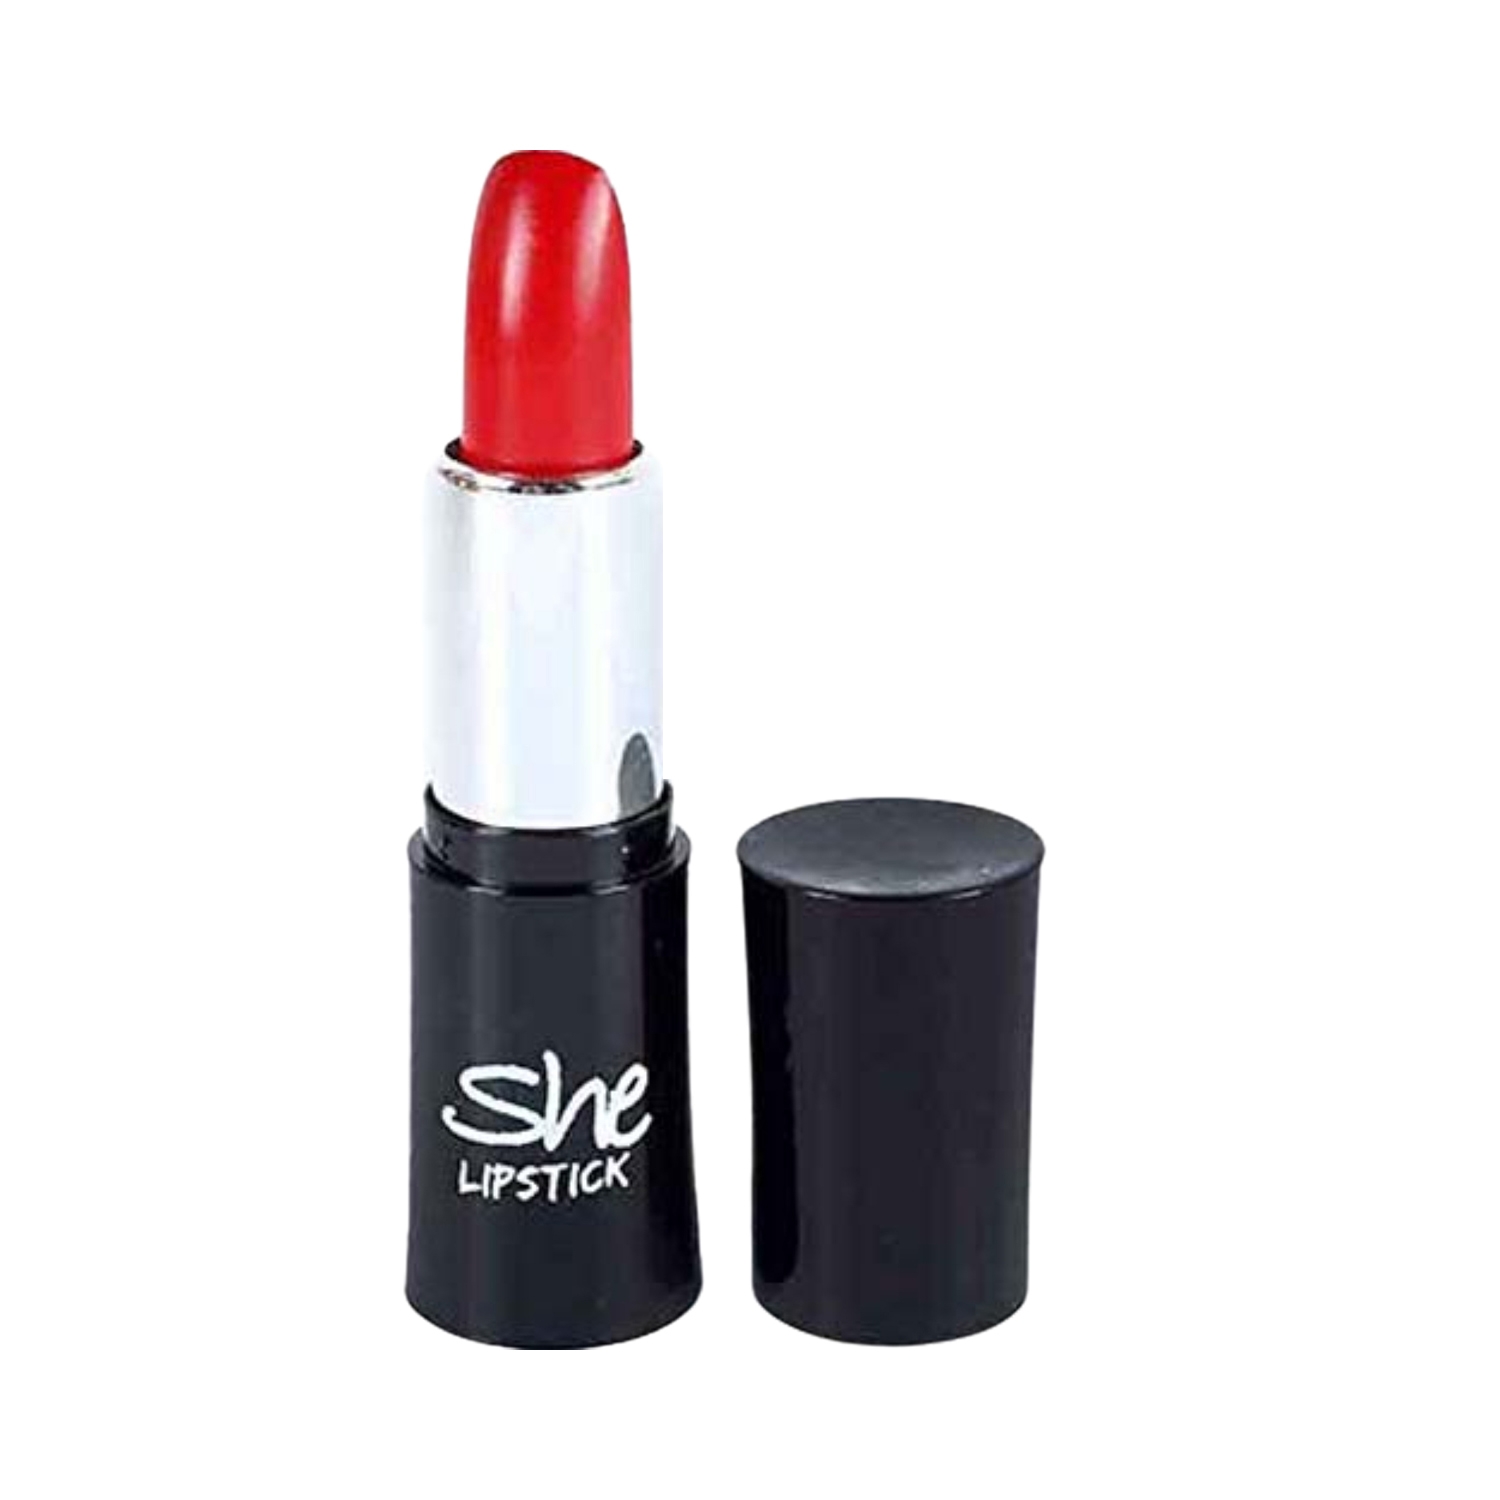 She | She Super Shine Lipstick - 08 Shade (4.5g)